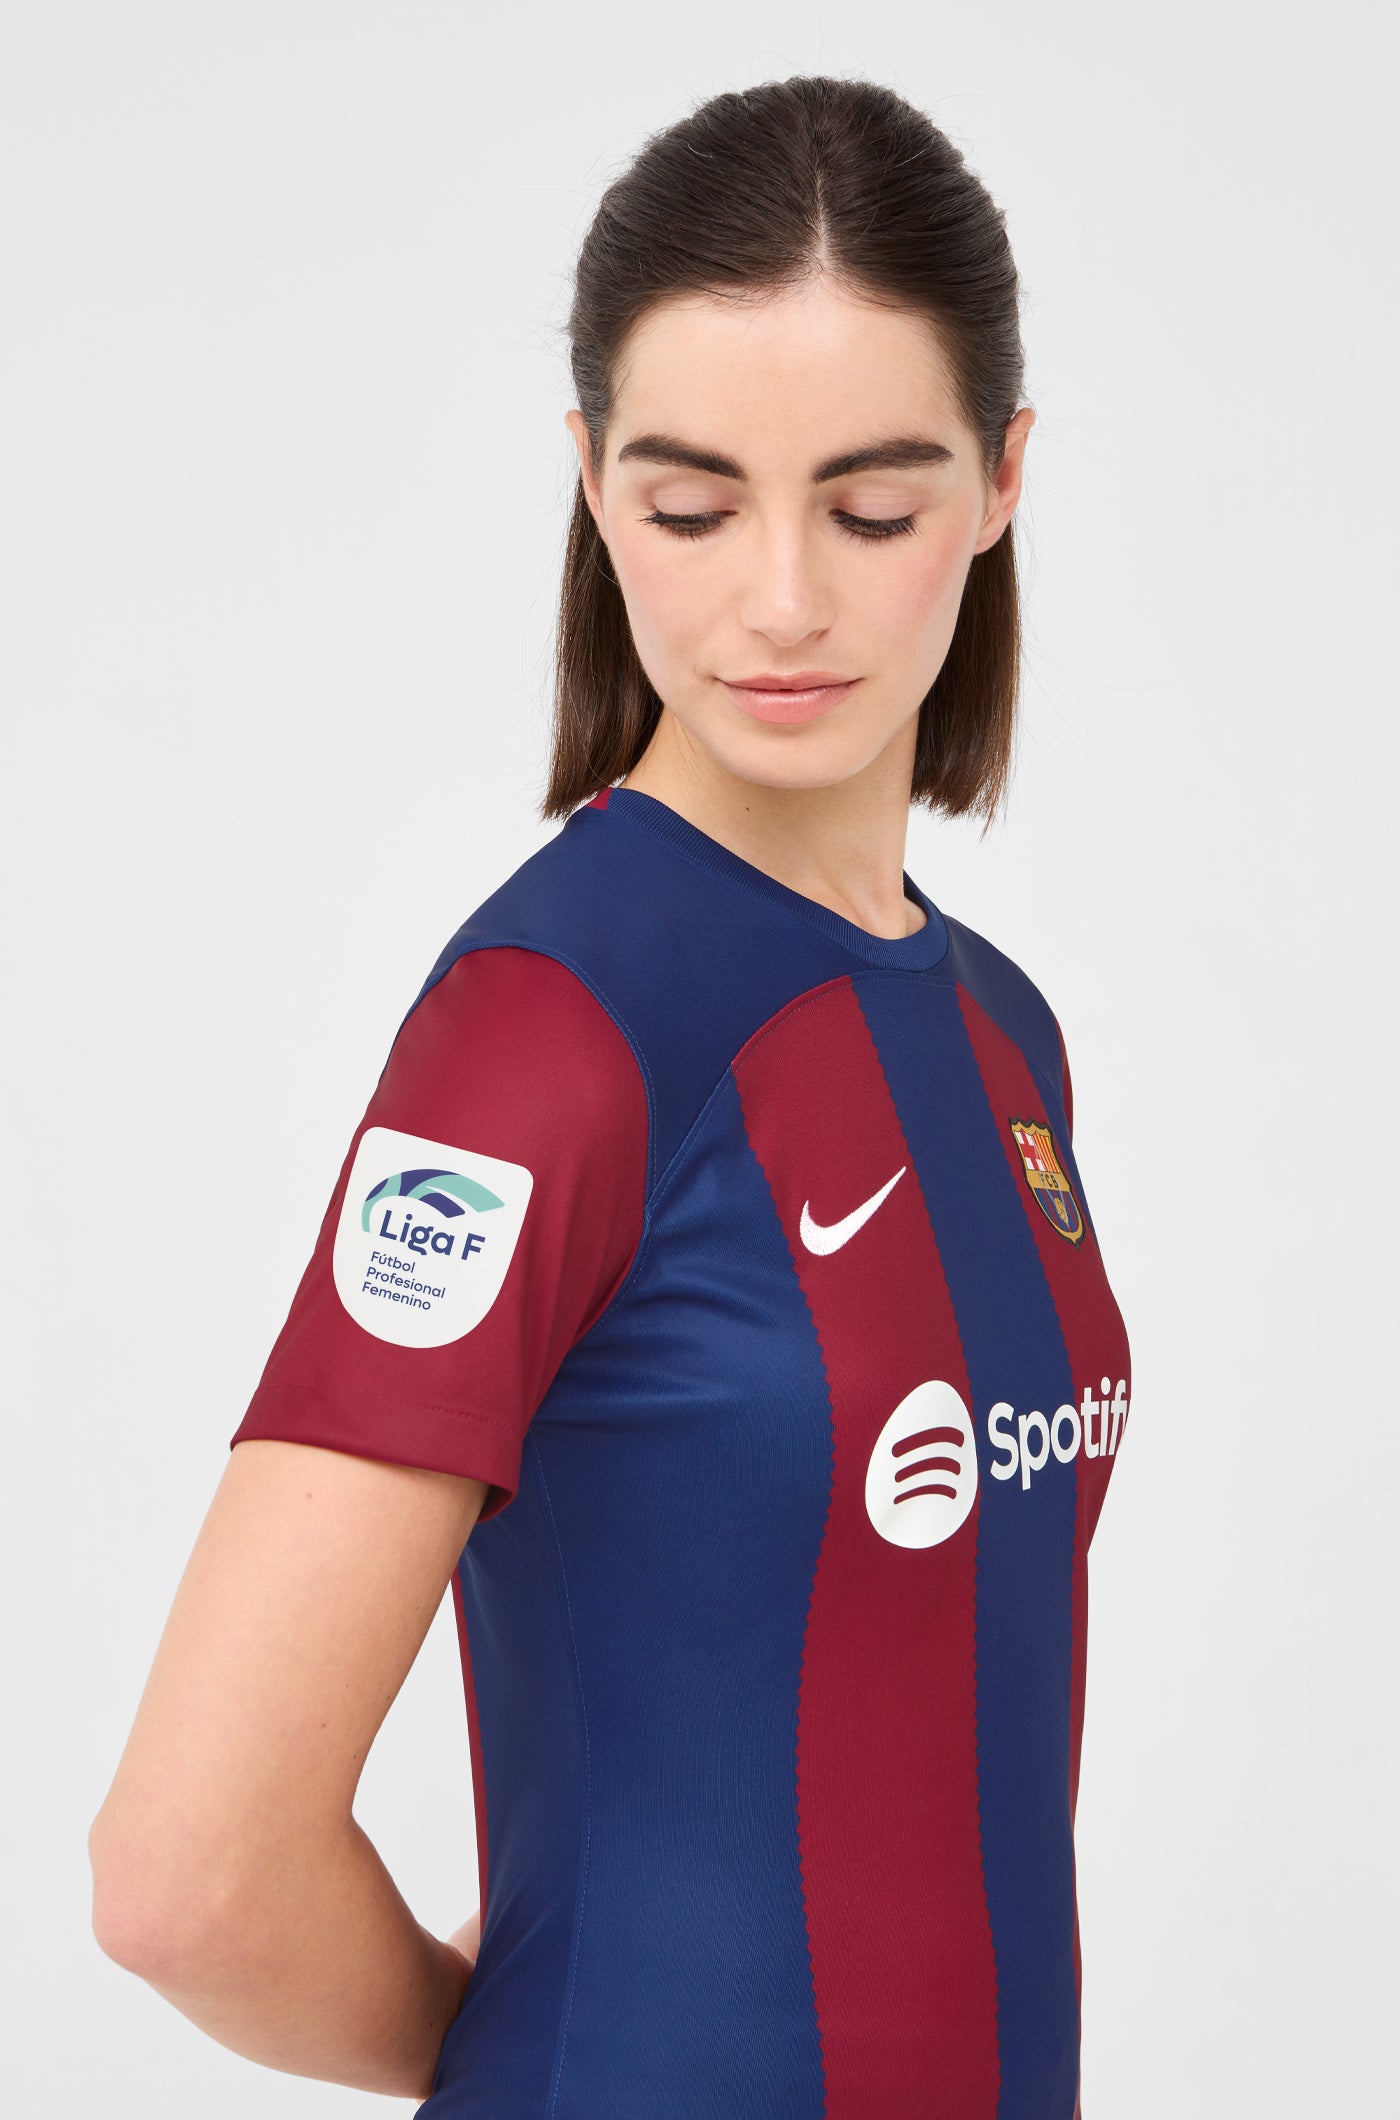 Liga F FC Barcelona home shirt 23/24 - Women - MARTA